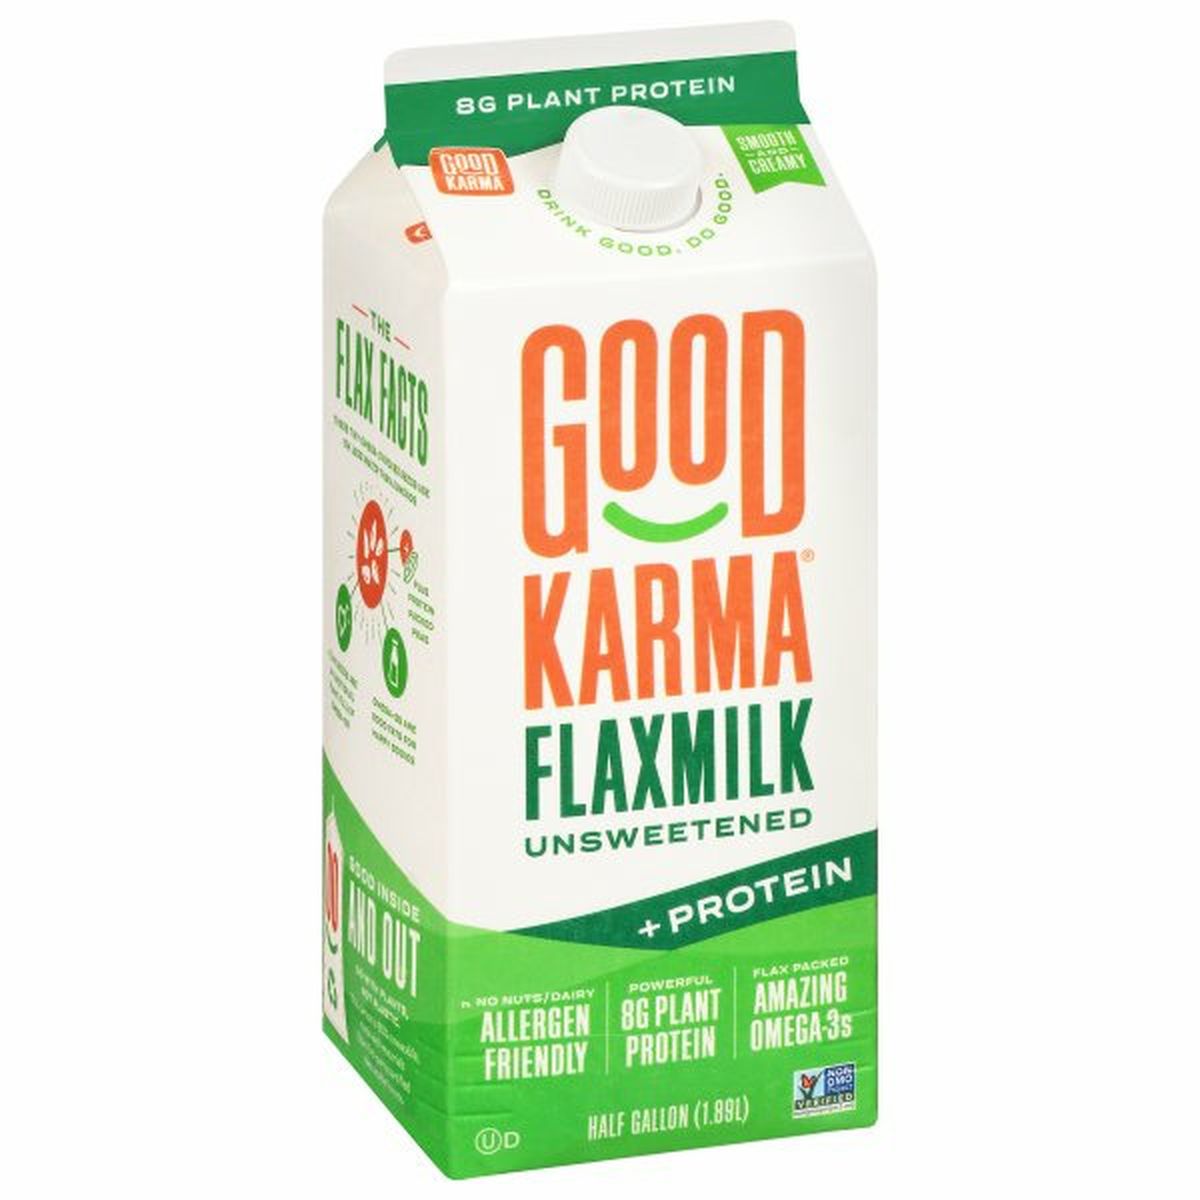 Calories in Good Karma Flaxmilk, Unsweetened, +Protein